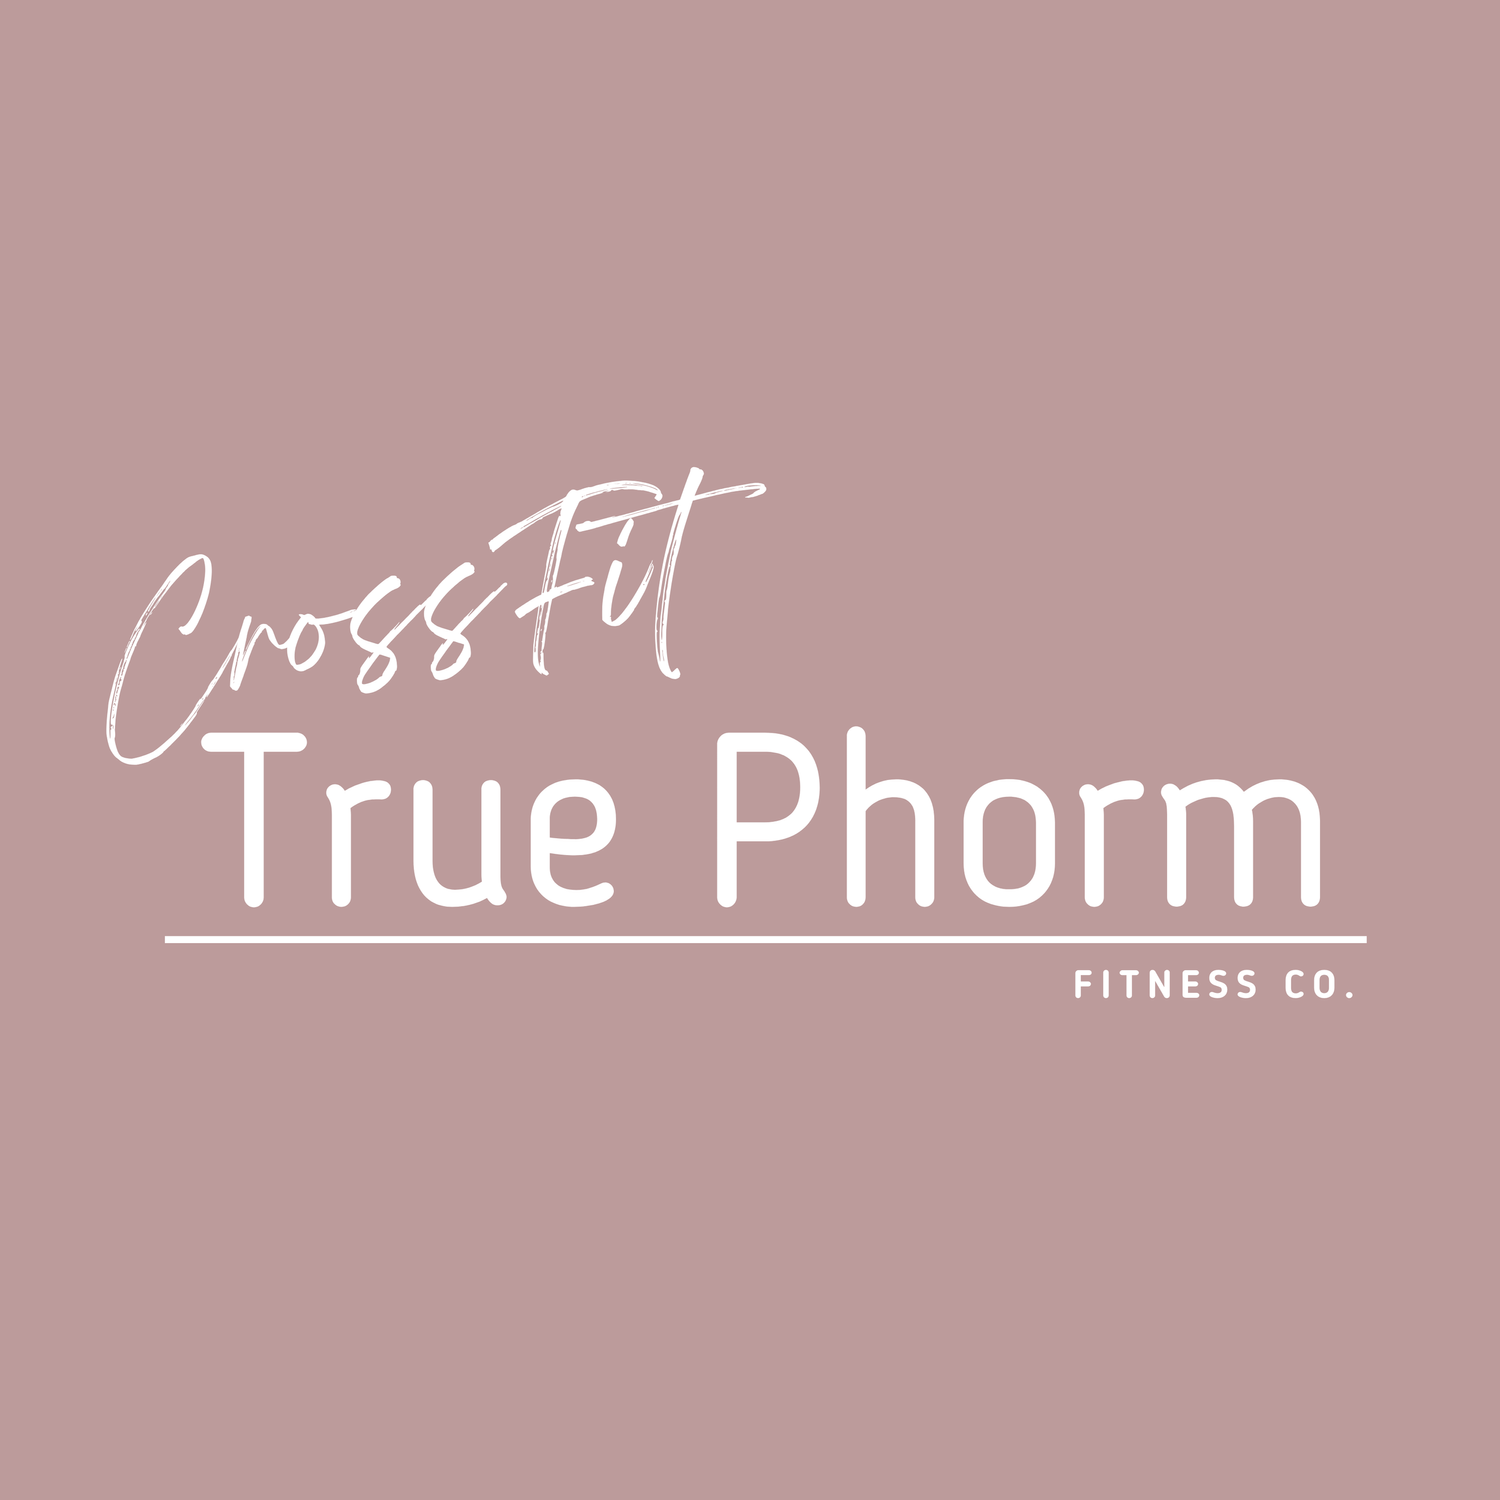 CrossFit True Phorm